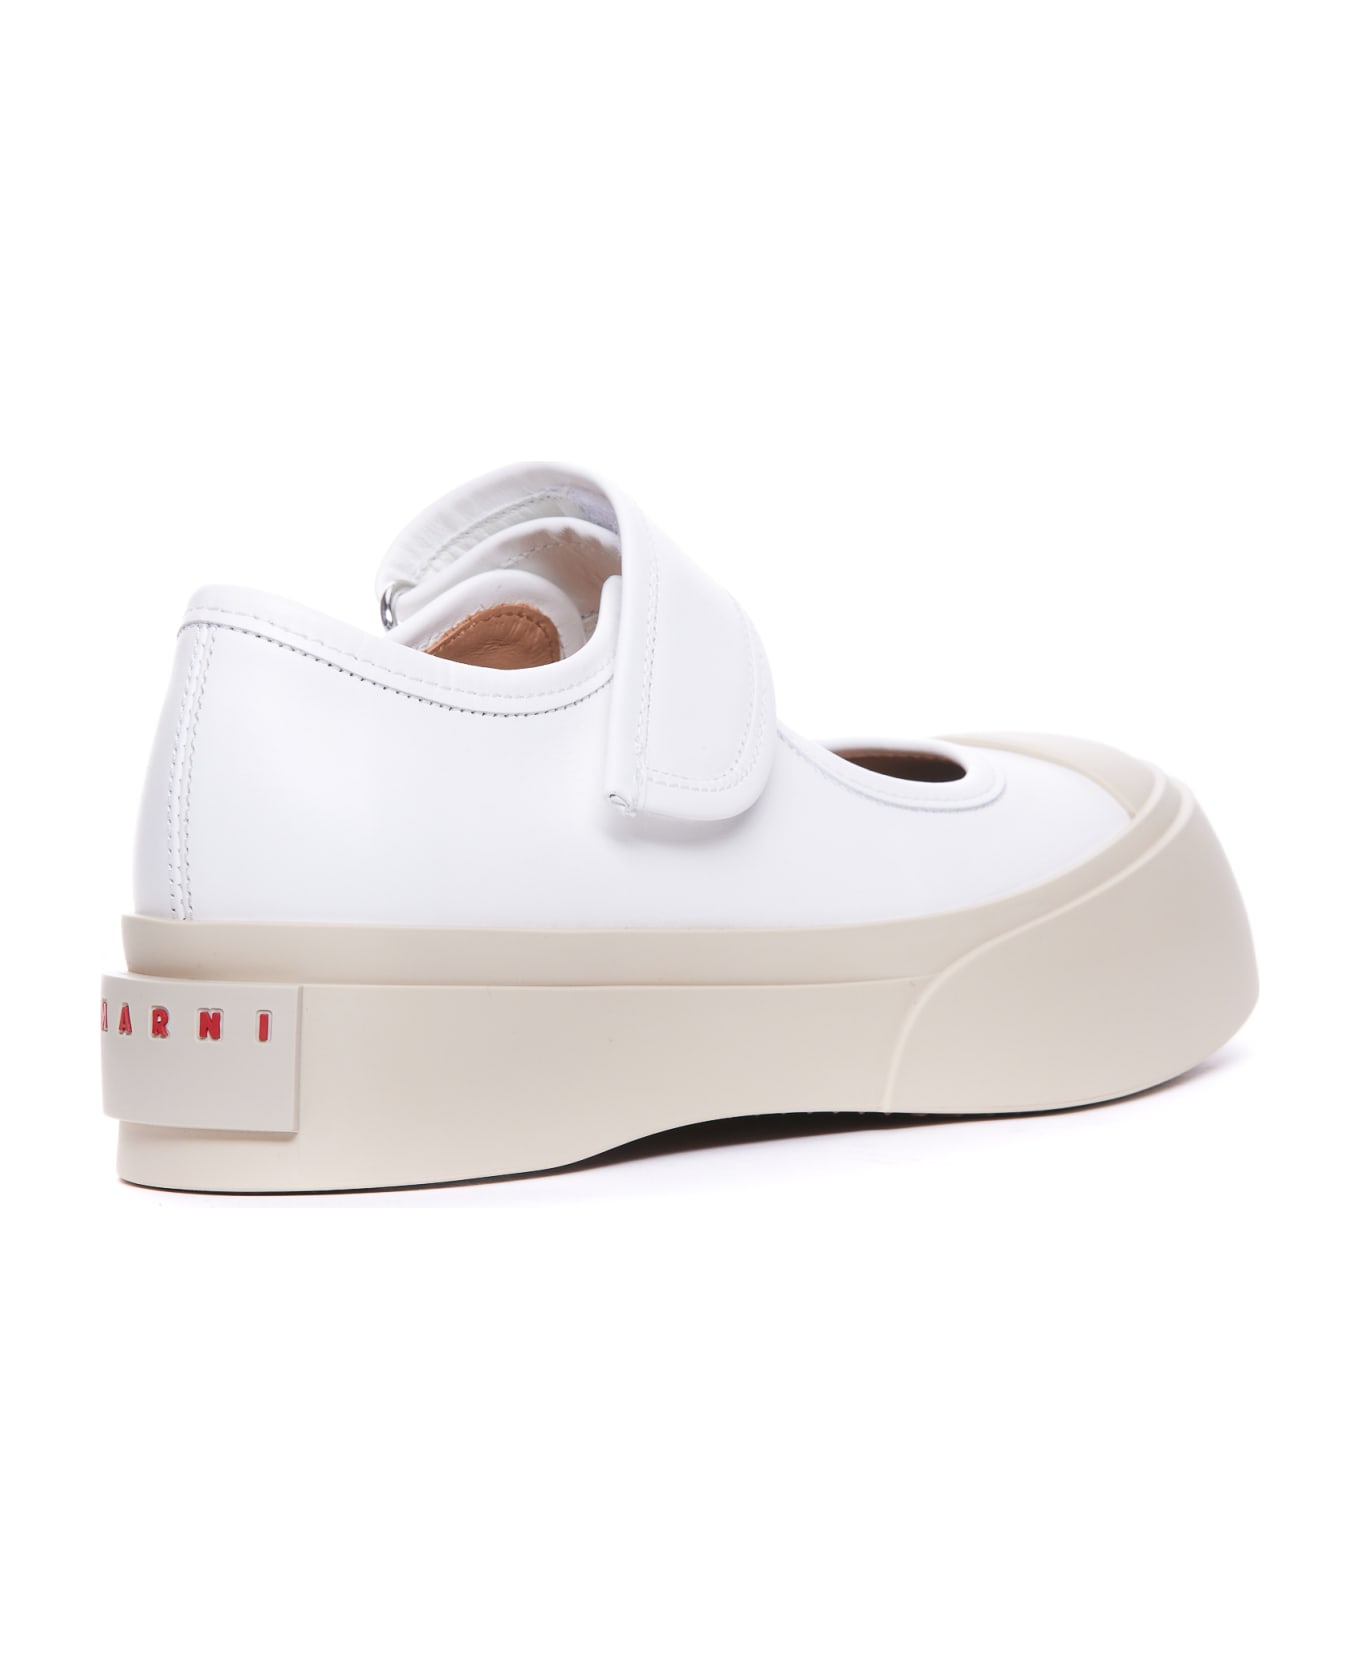 Marni Mary Jane Sneakers - White